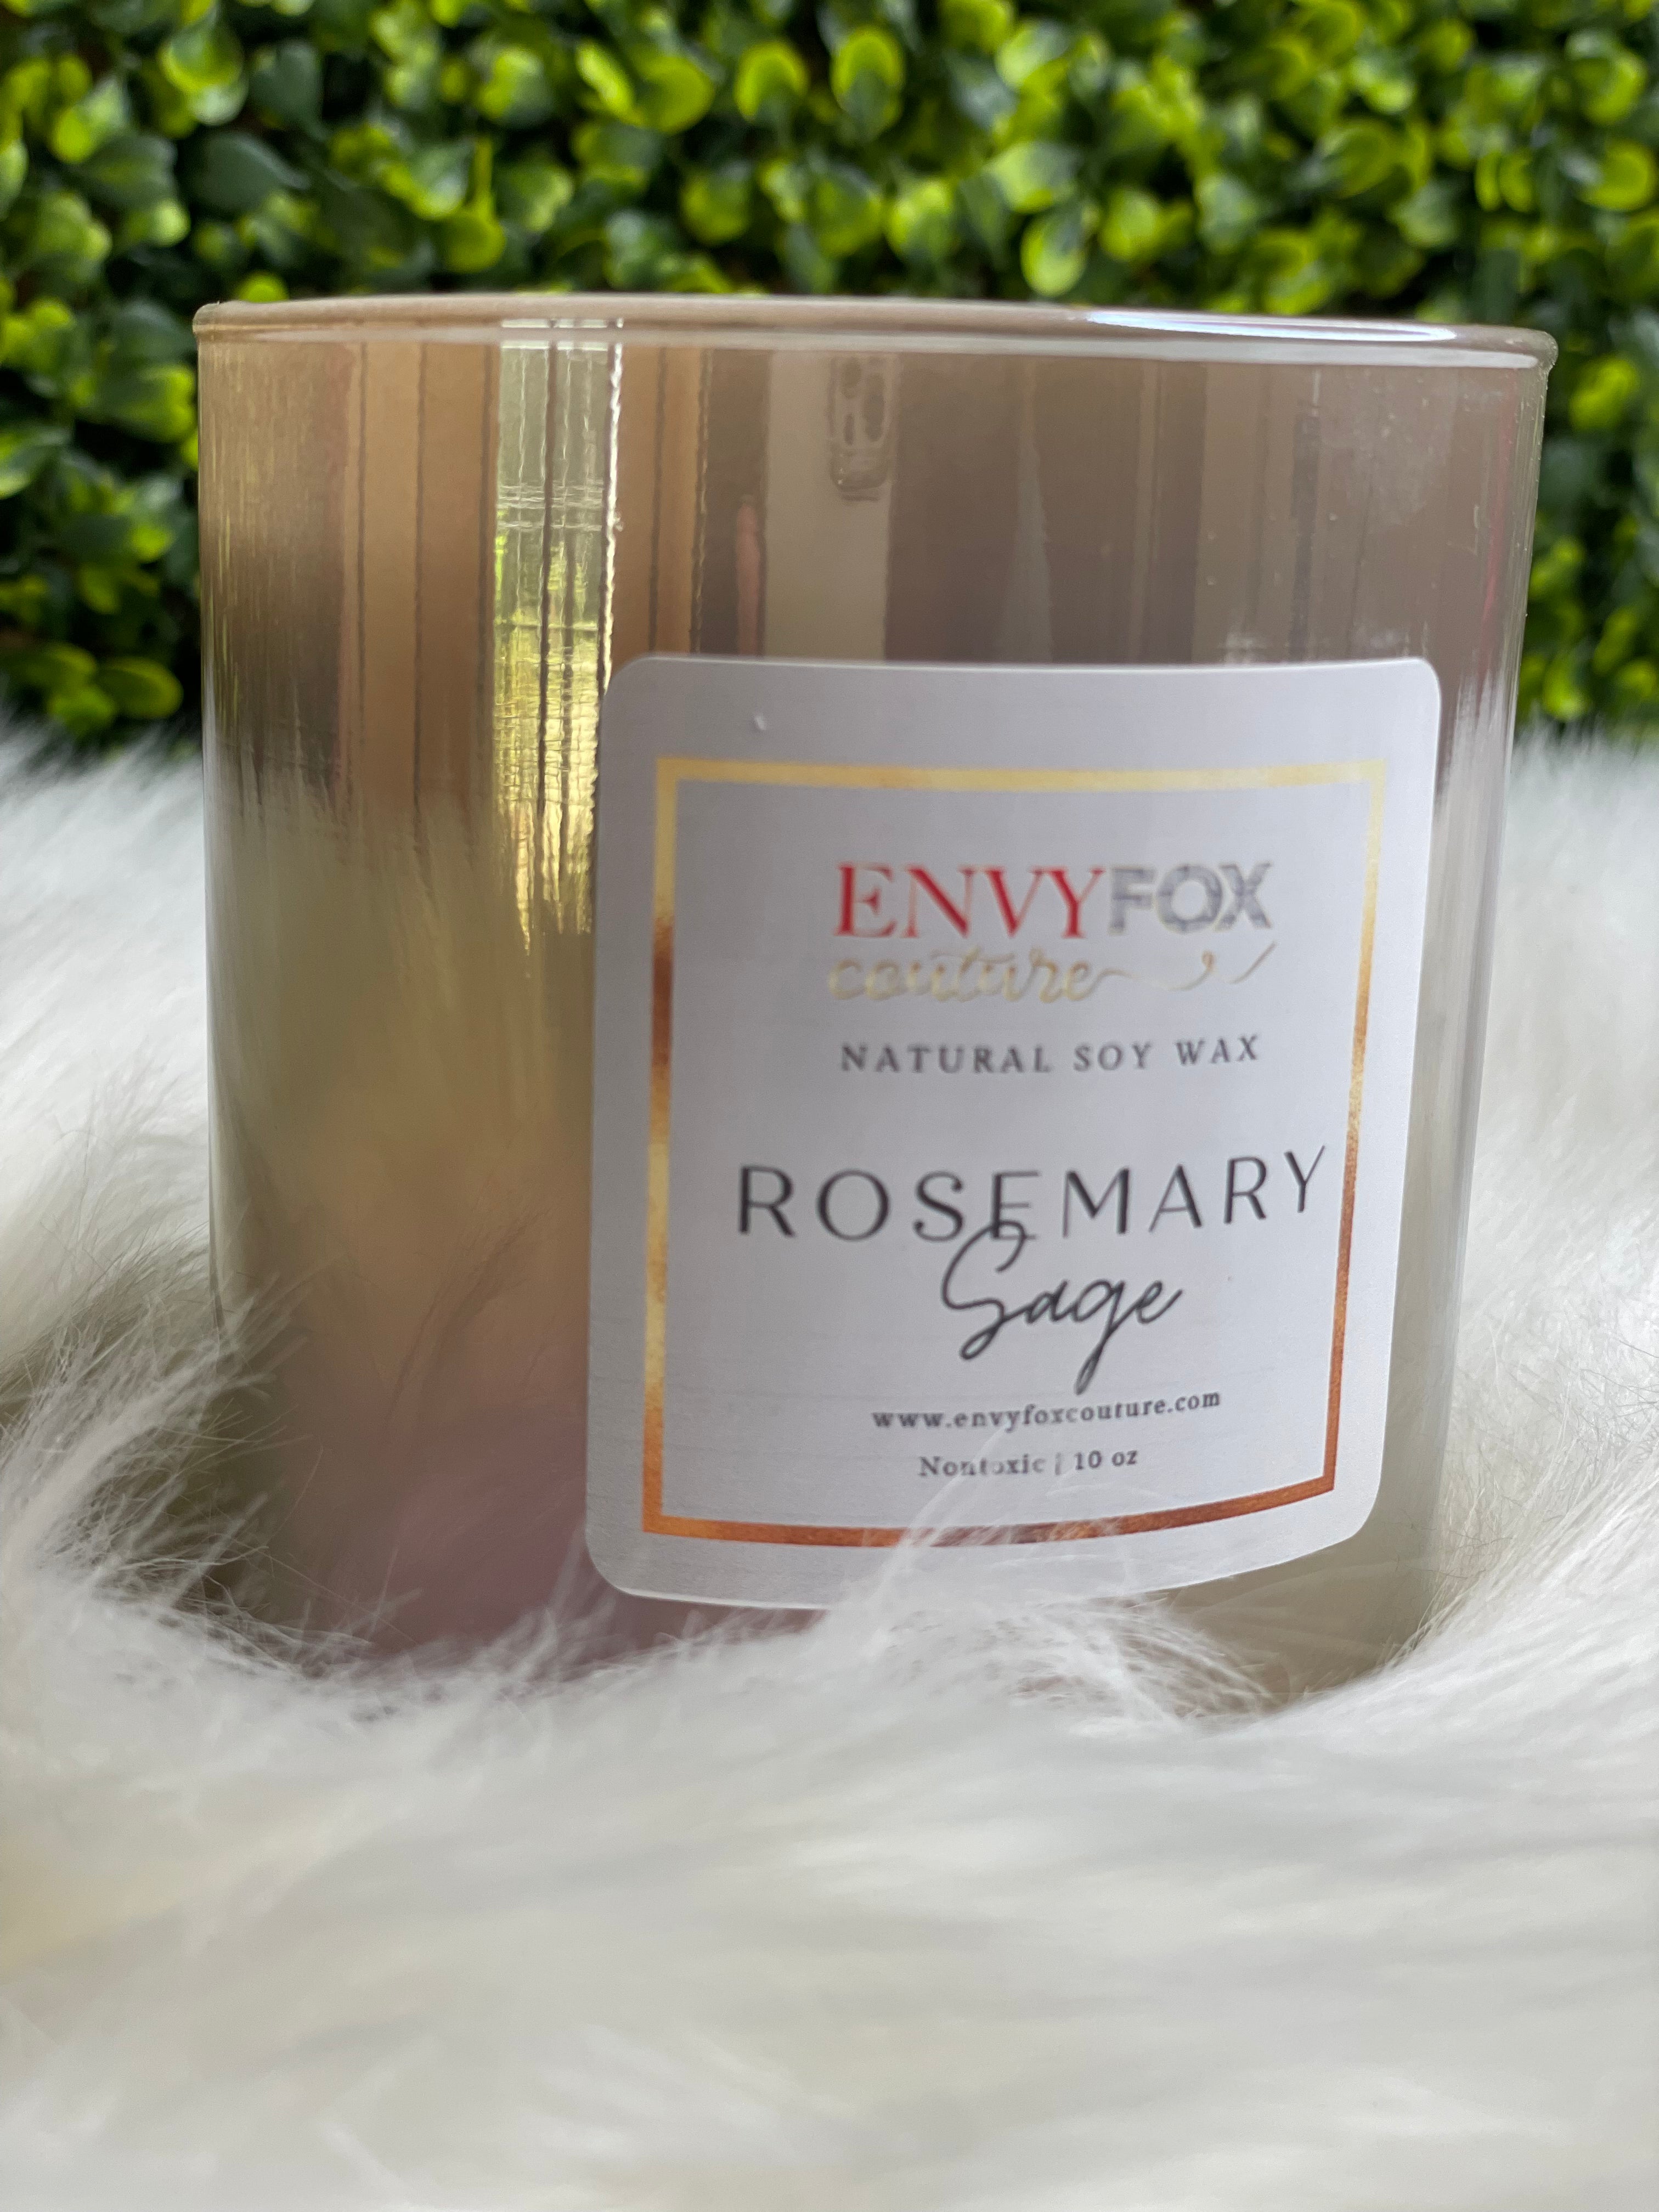 Rosemary Sage 10 oz Natural Soy Wax Candle